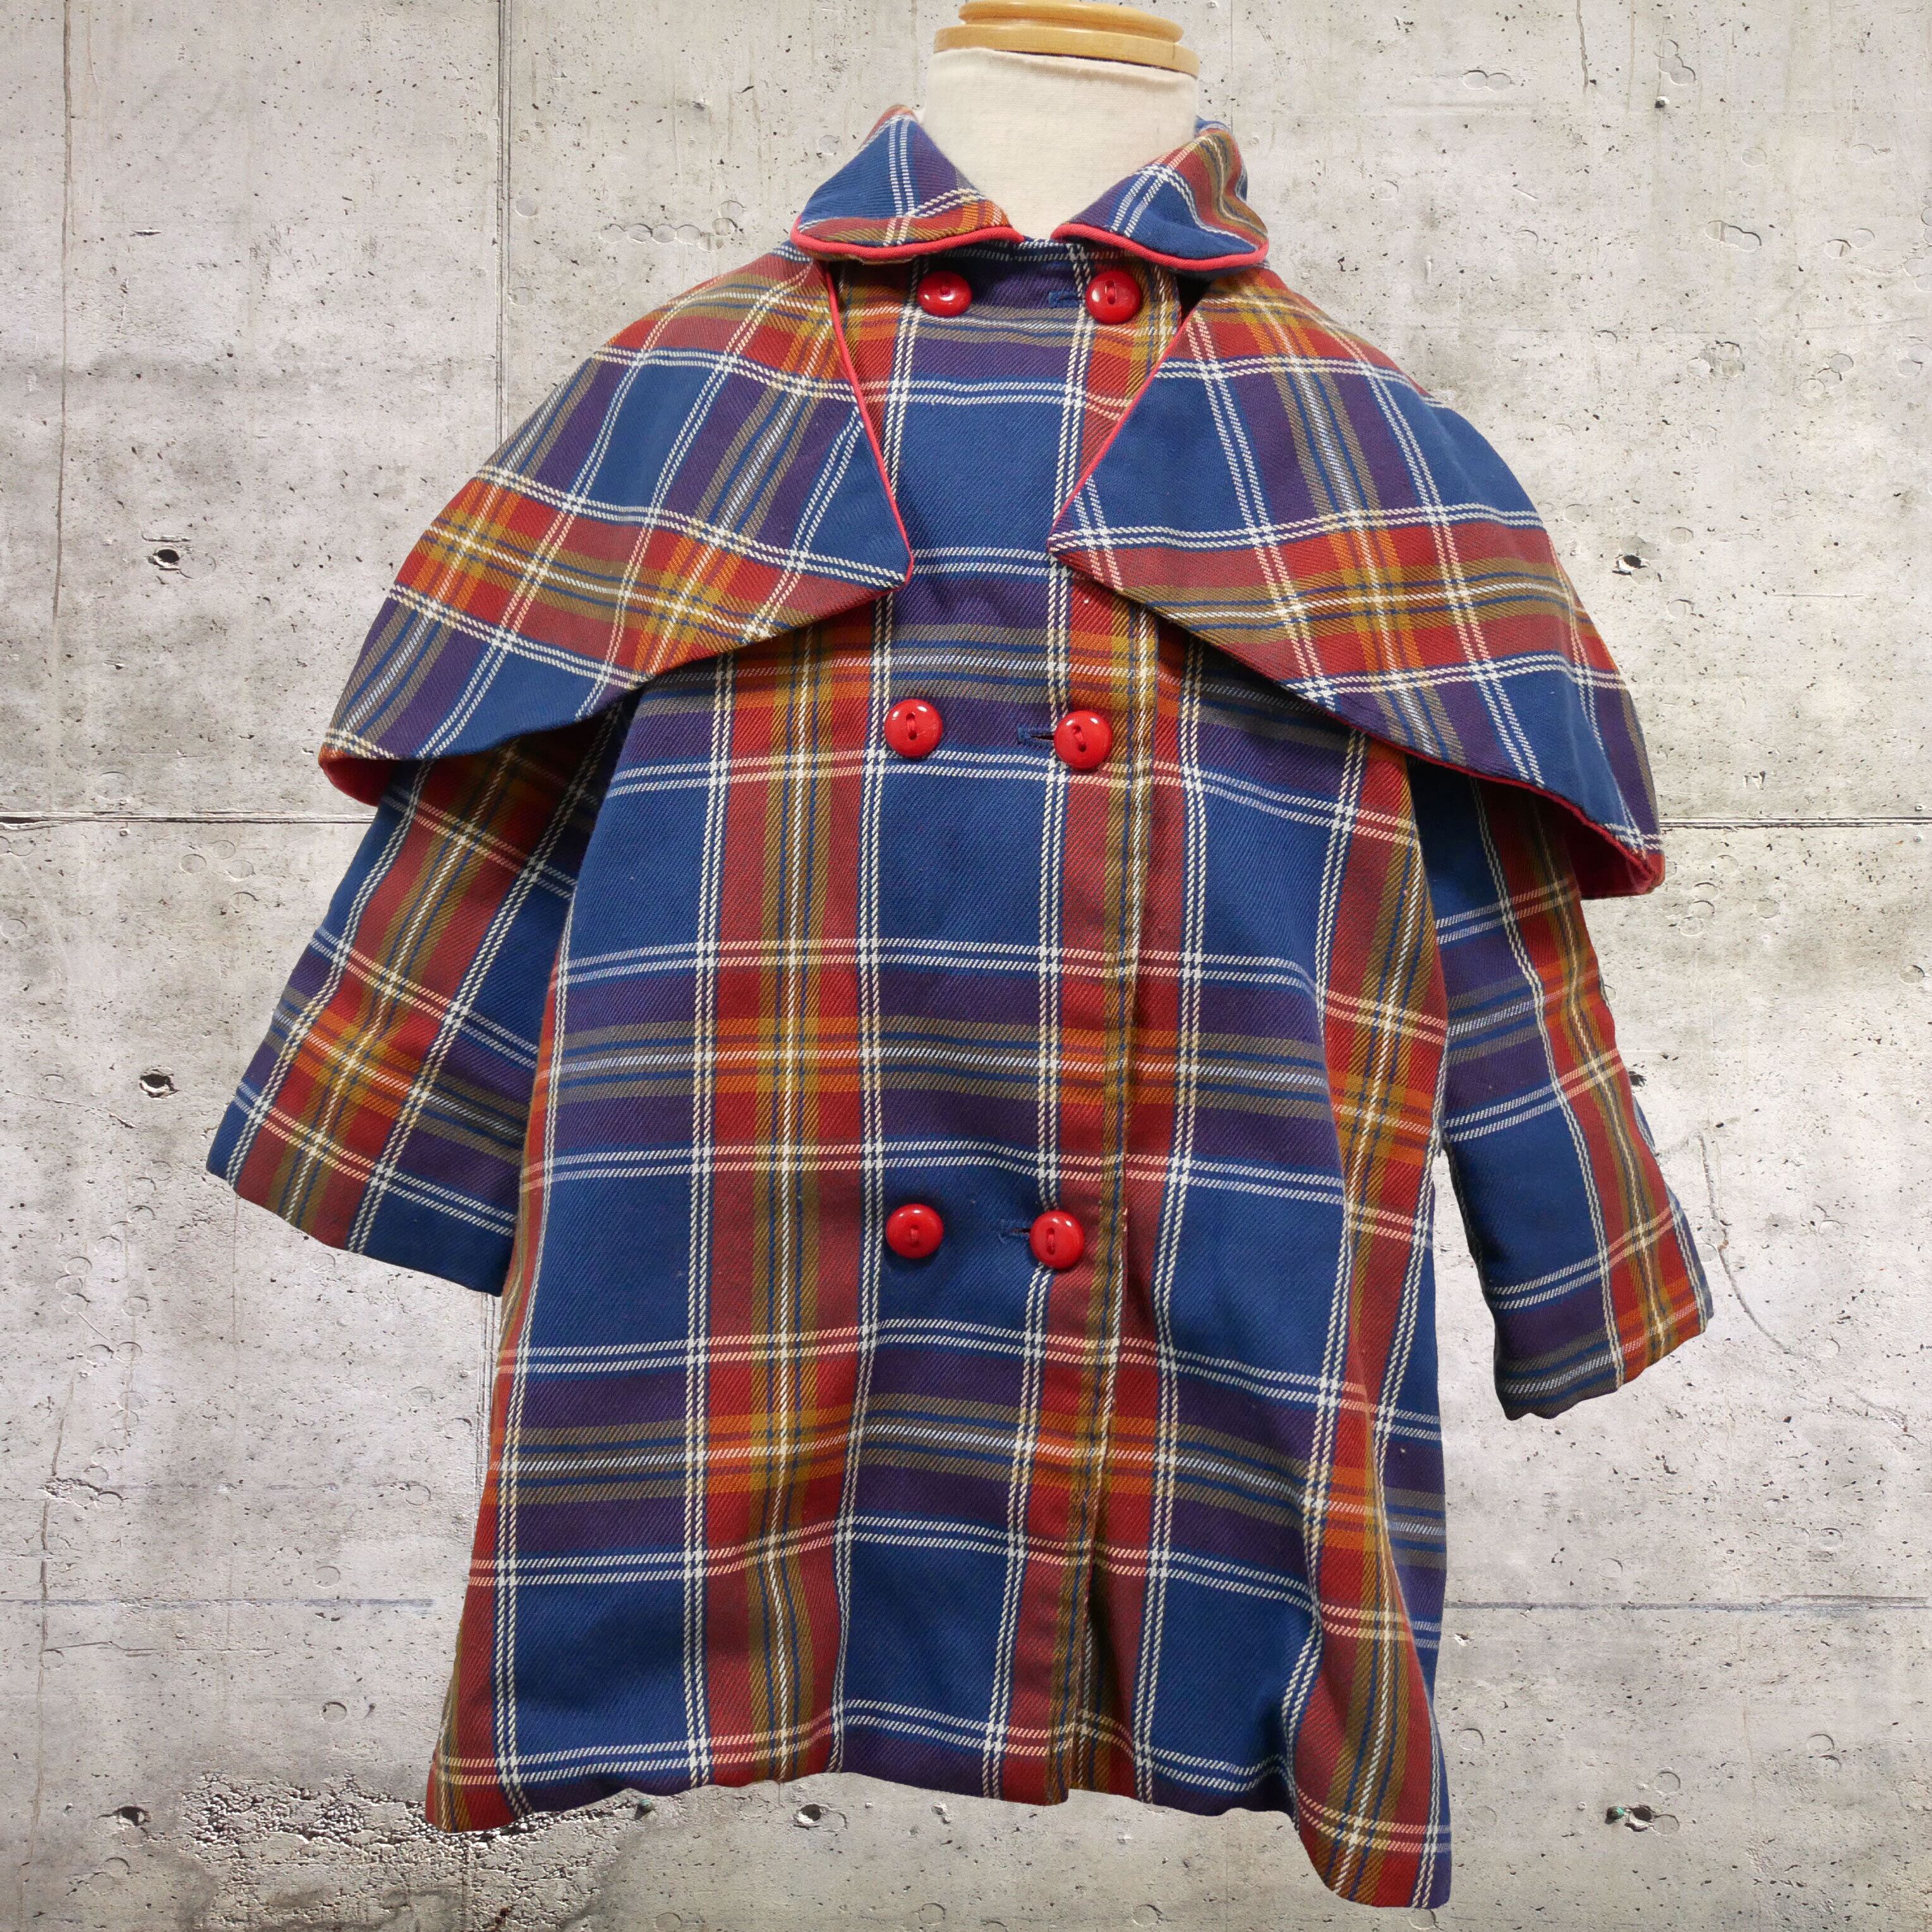 【kids】Vintage Toddler Baby Coat Jacket Matching Hat Plaid Christmas Holiday  2T 18-24【ヴィンテージ キッズ チェック柄 ジャケット コート マント 帽子付き】